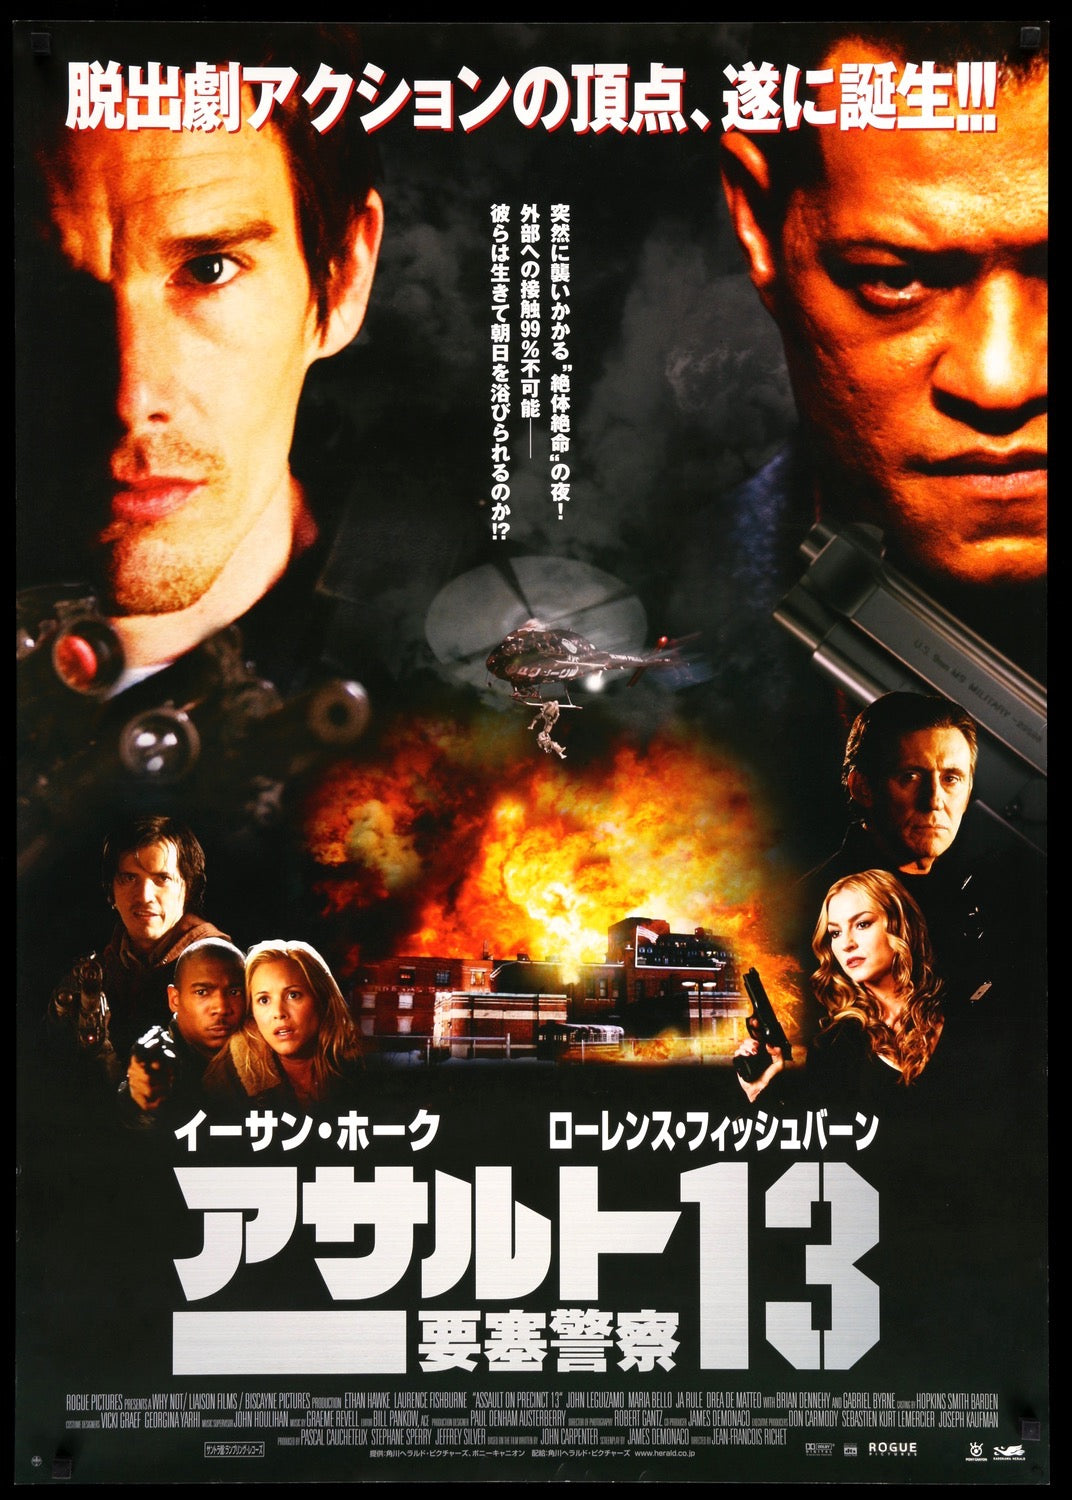 Assault on Precinct 13 (2005) original movie poster for sale at Original Film Art